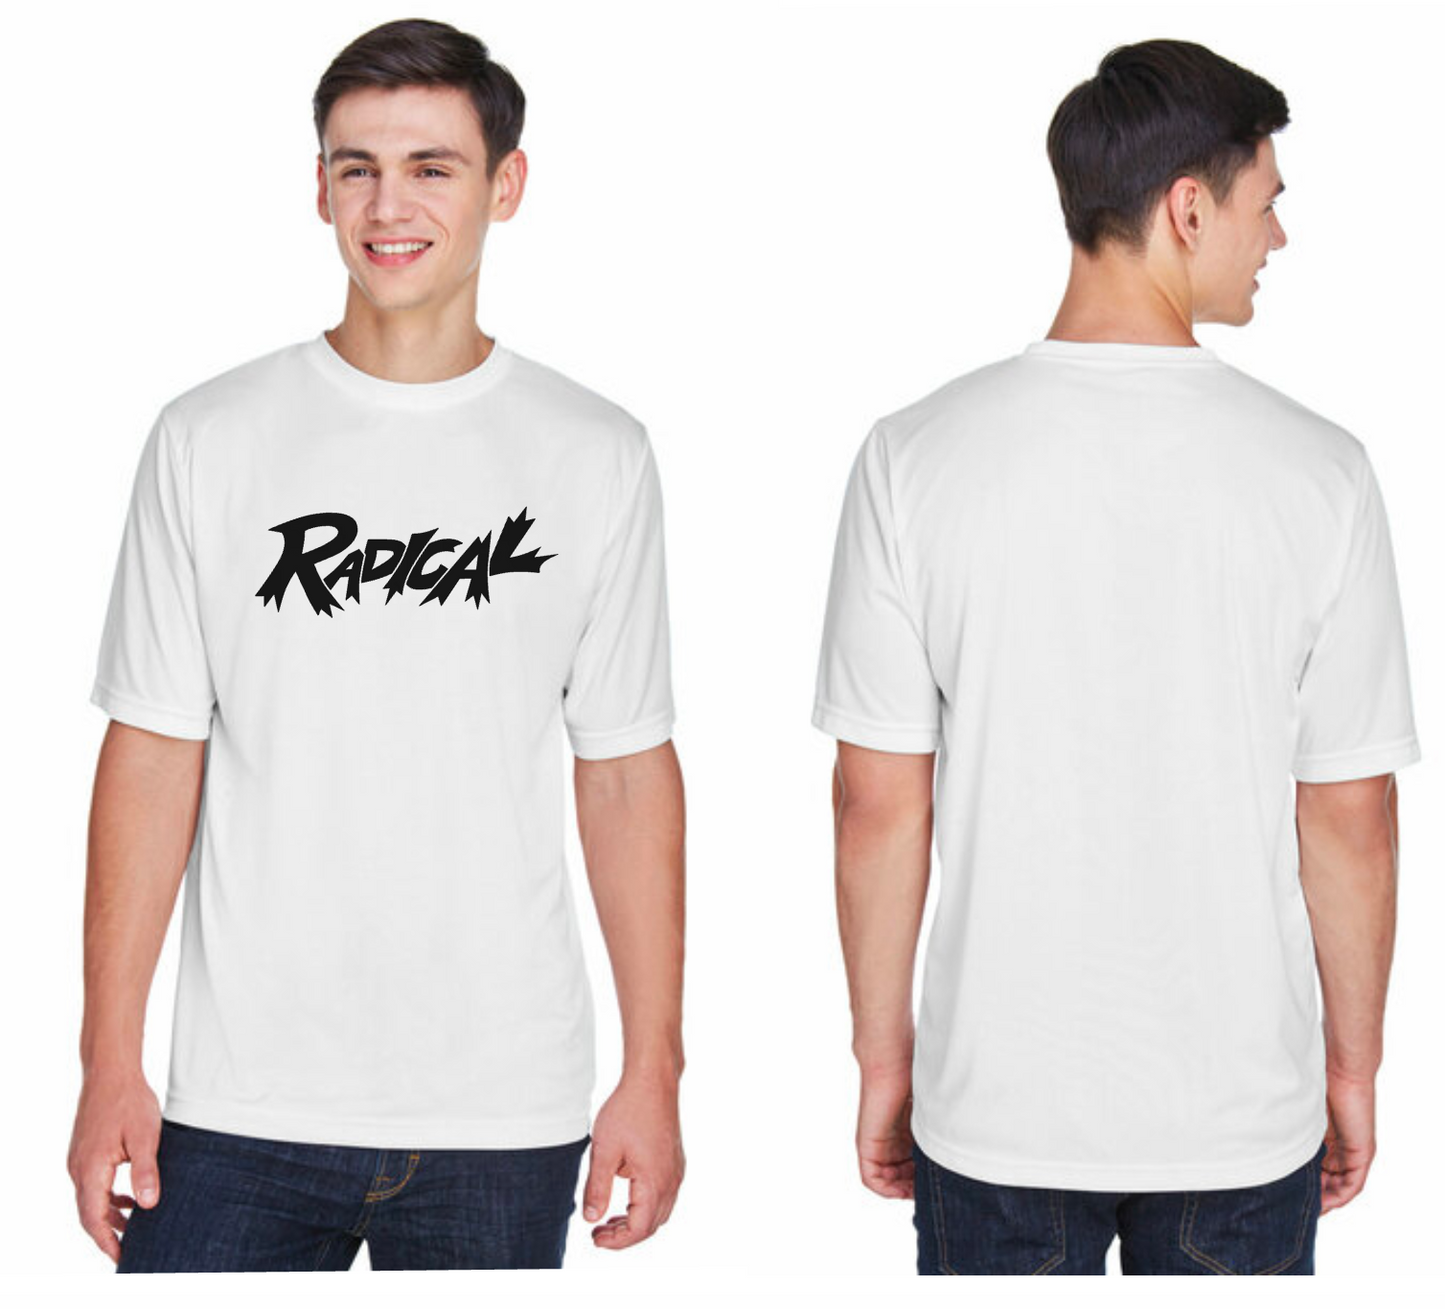 performance brand collection shirts - Radical